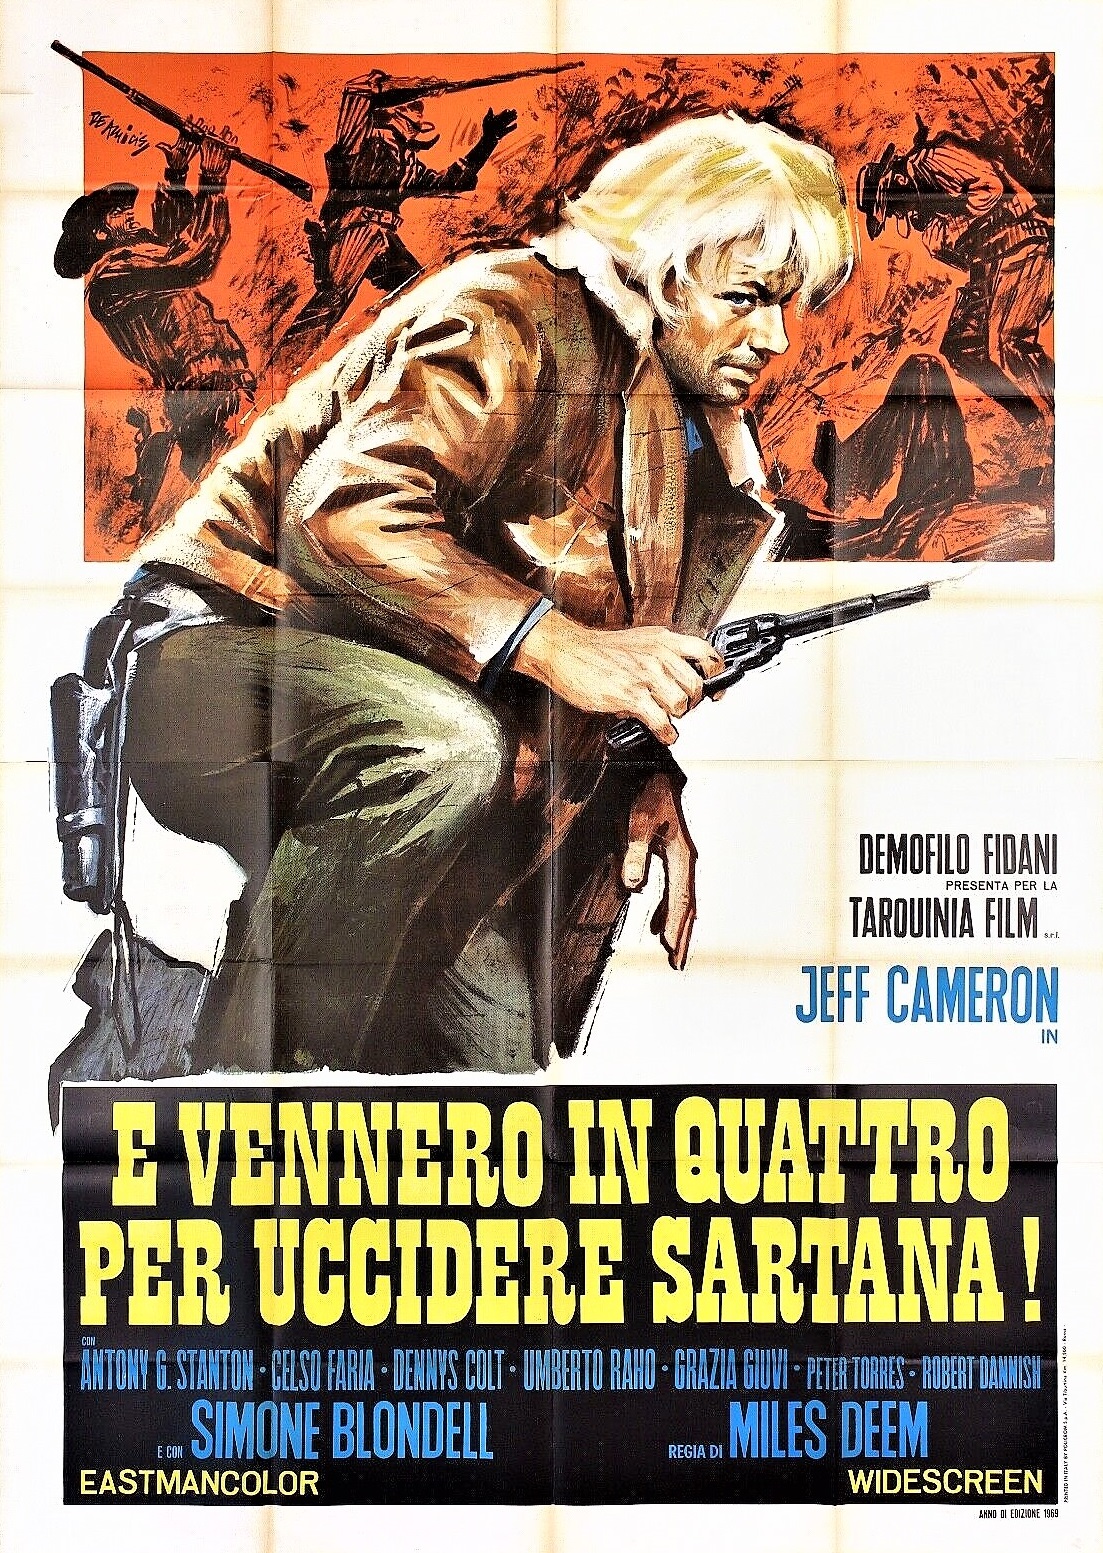 Four Came to Kill Sartana (1969) Screenshot 3 